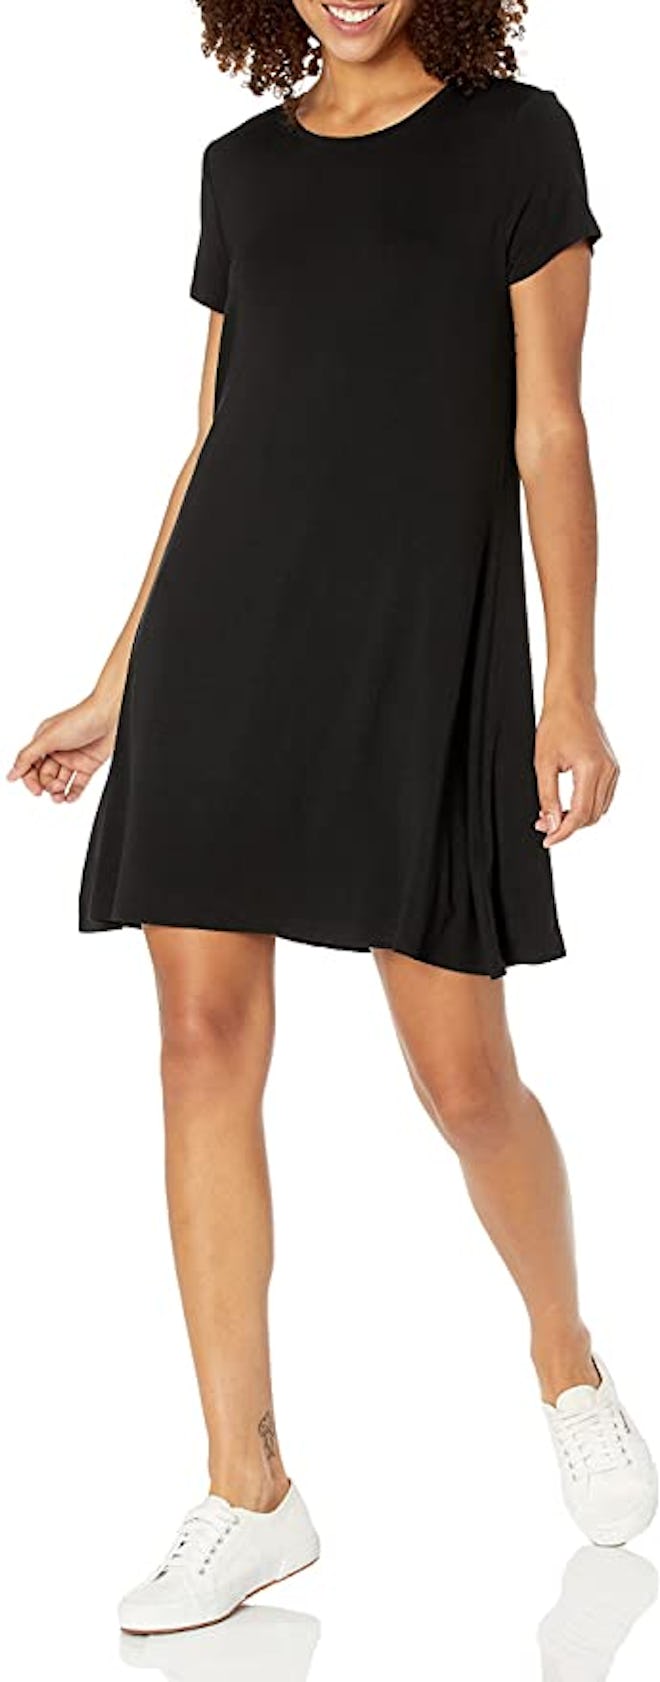 Amazon Essentials Short Sleeve A-Line Dress